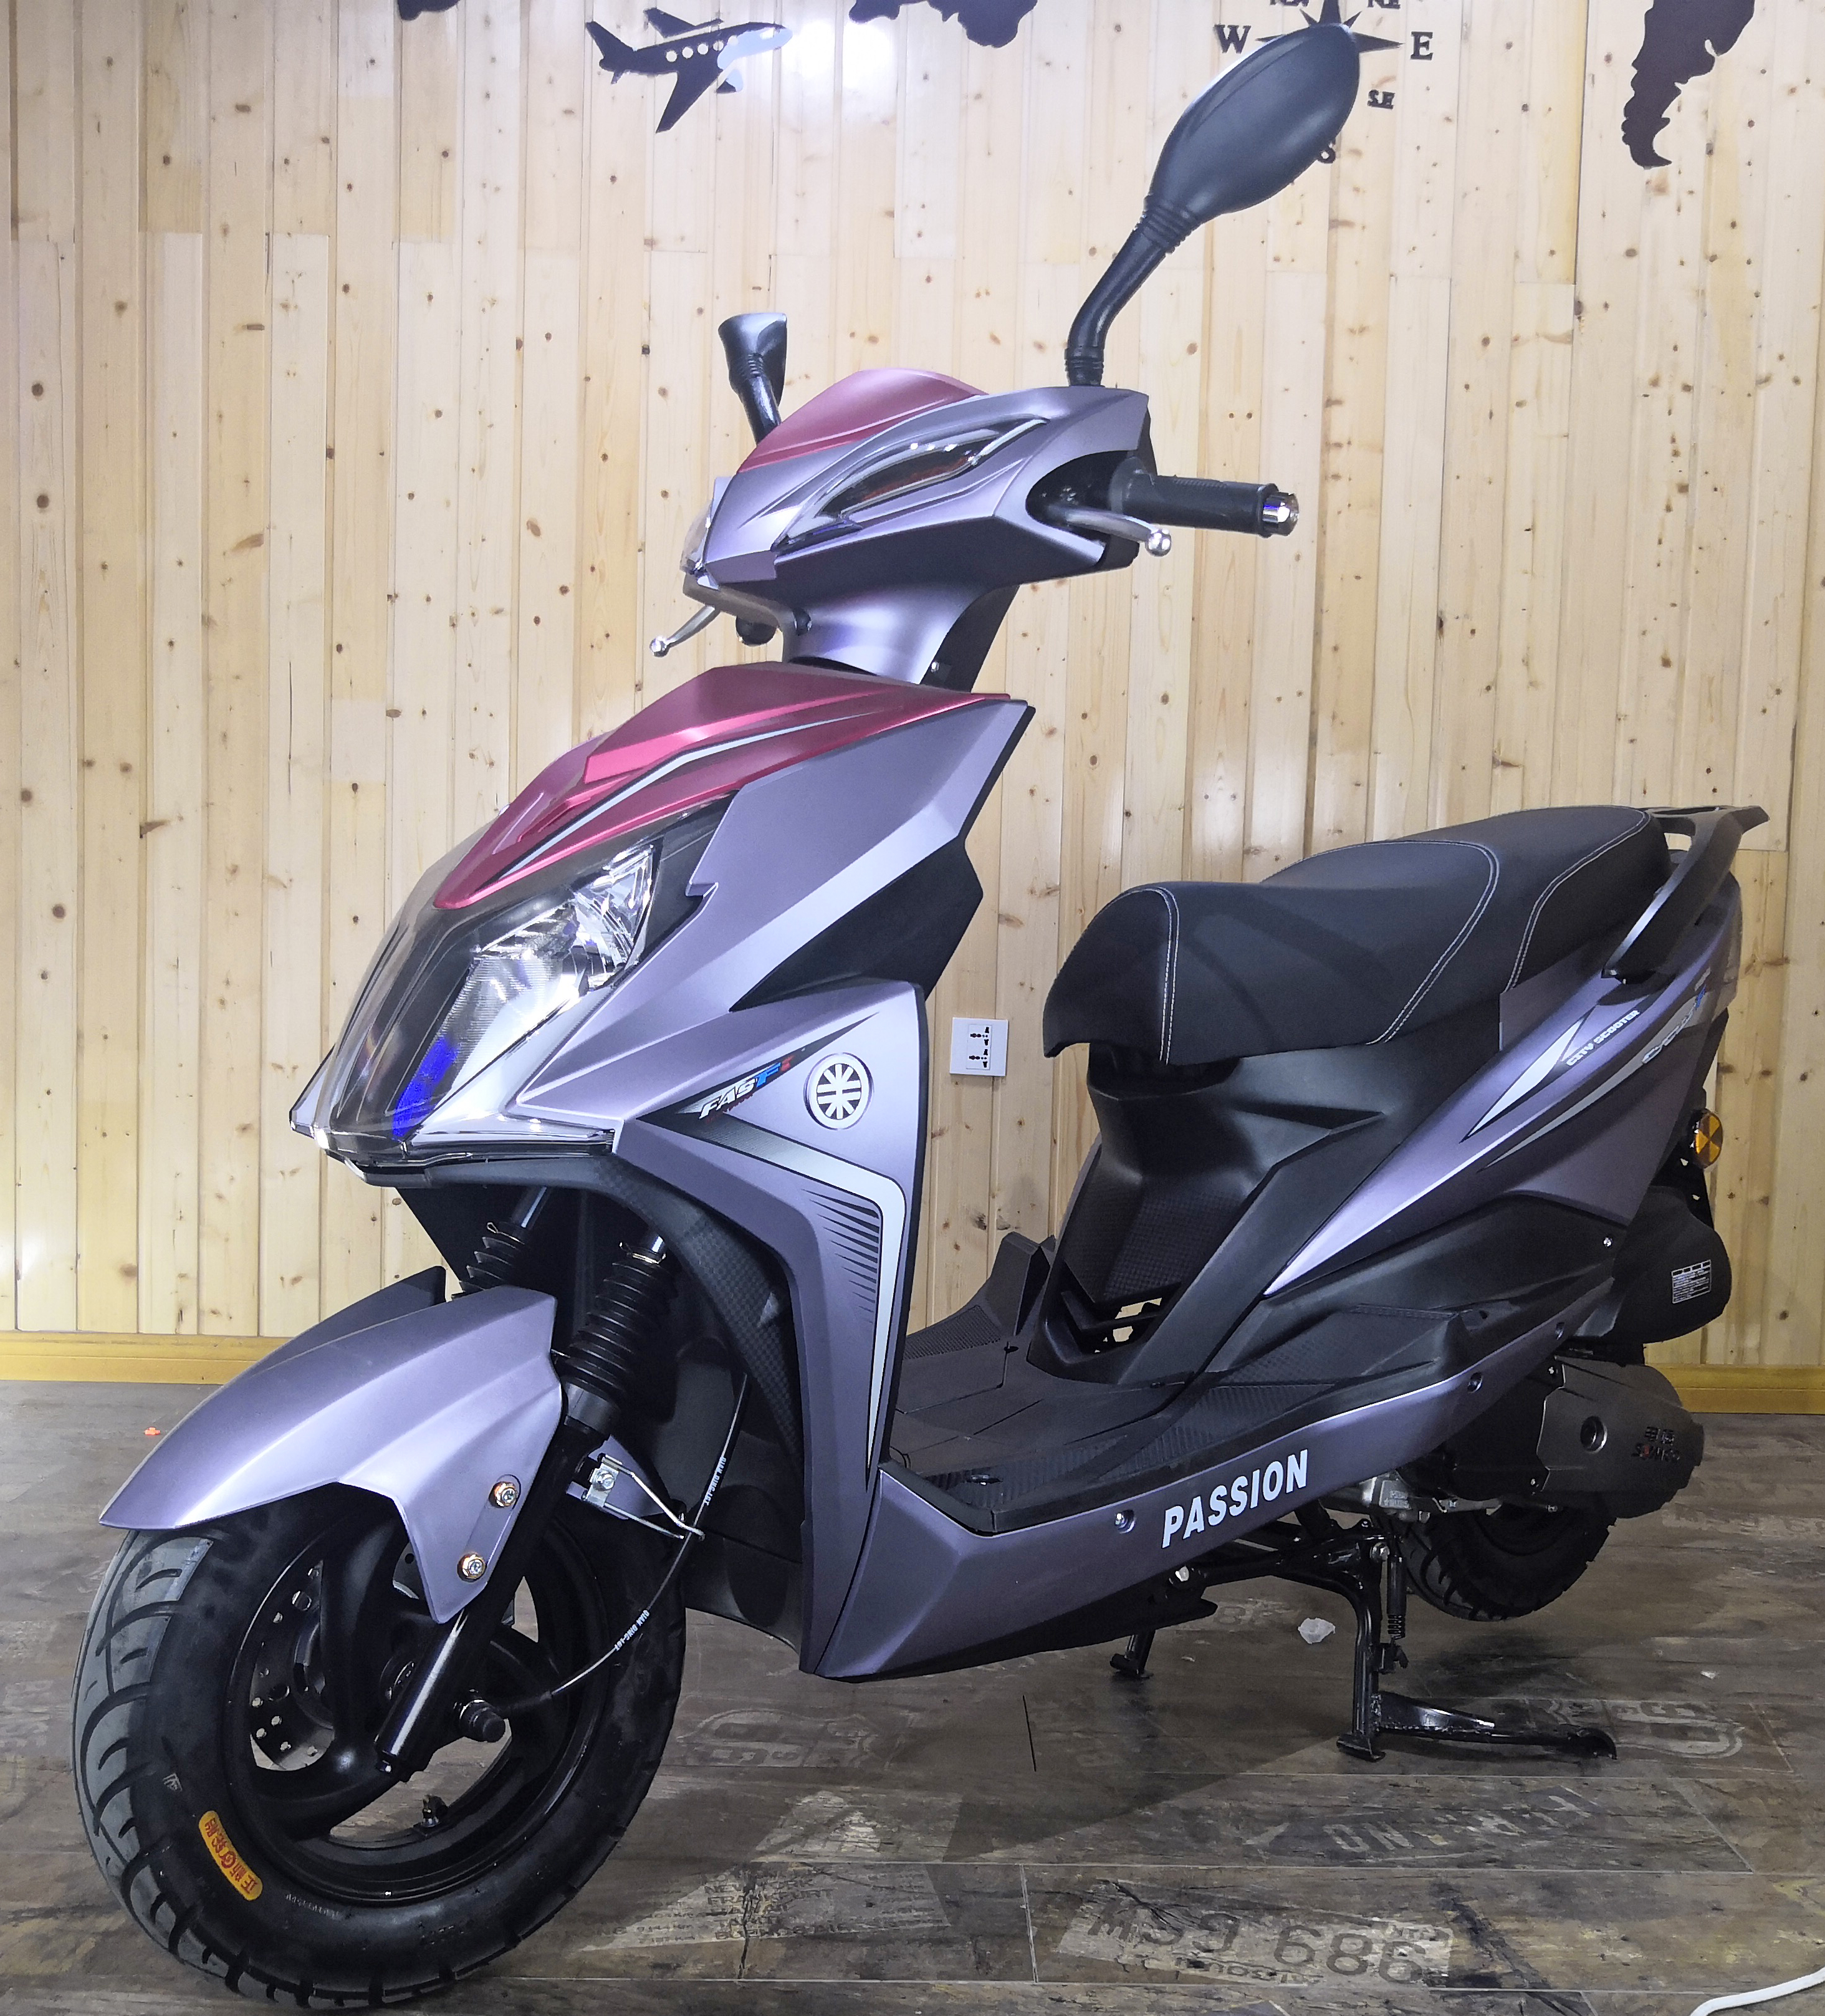 sanyou LINK NEW 150CC EFI scooter